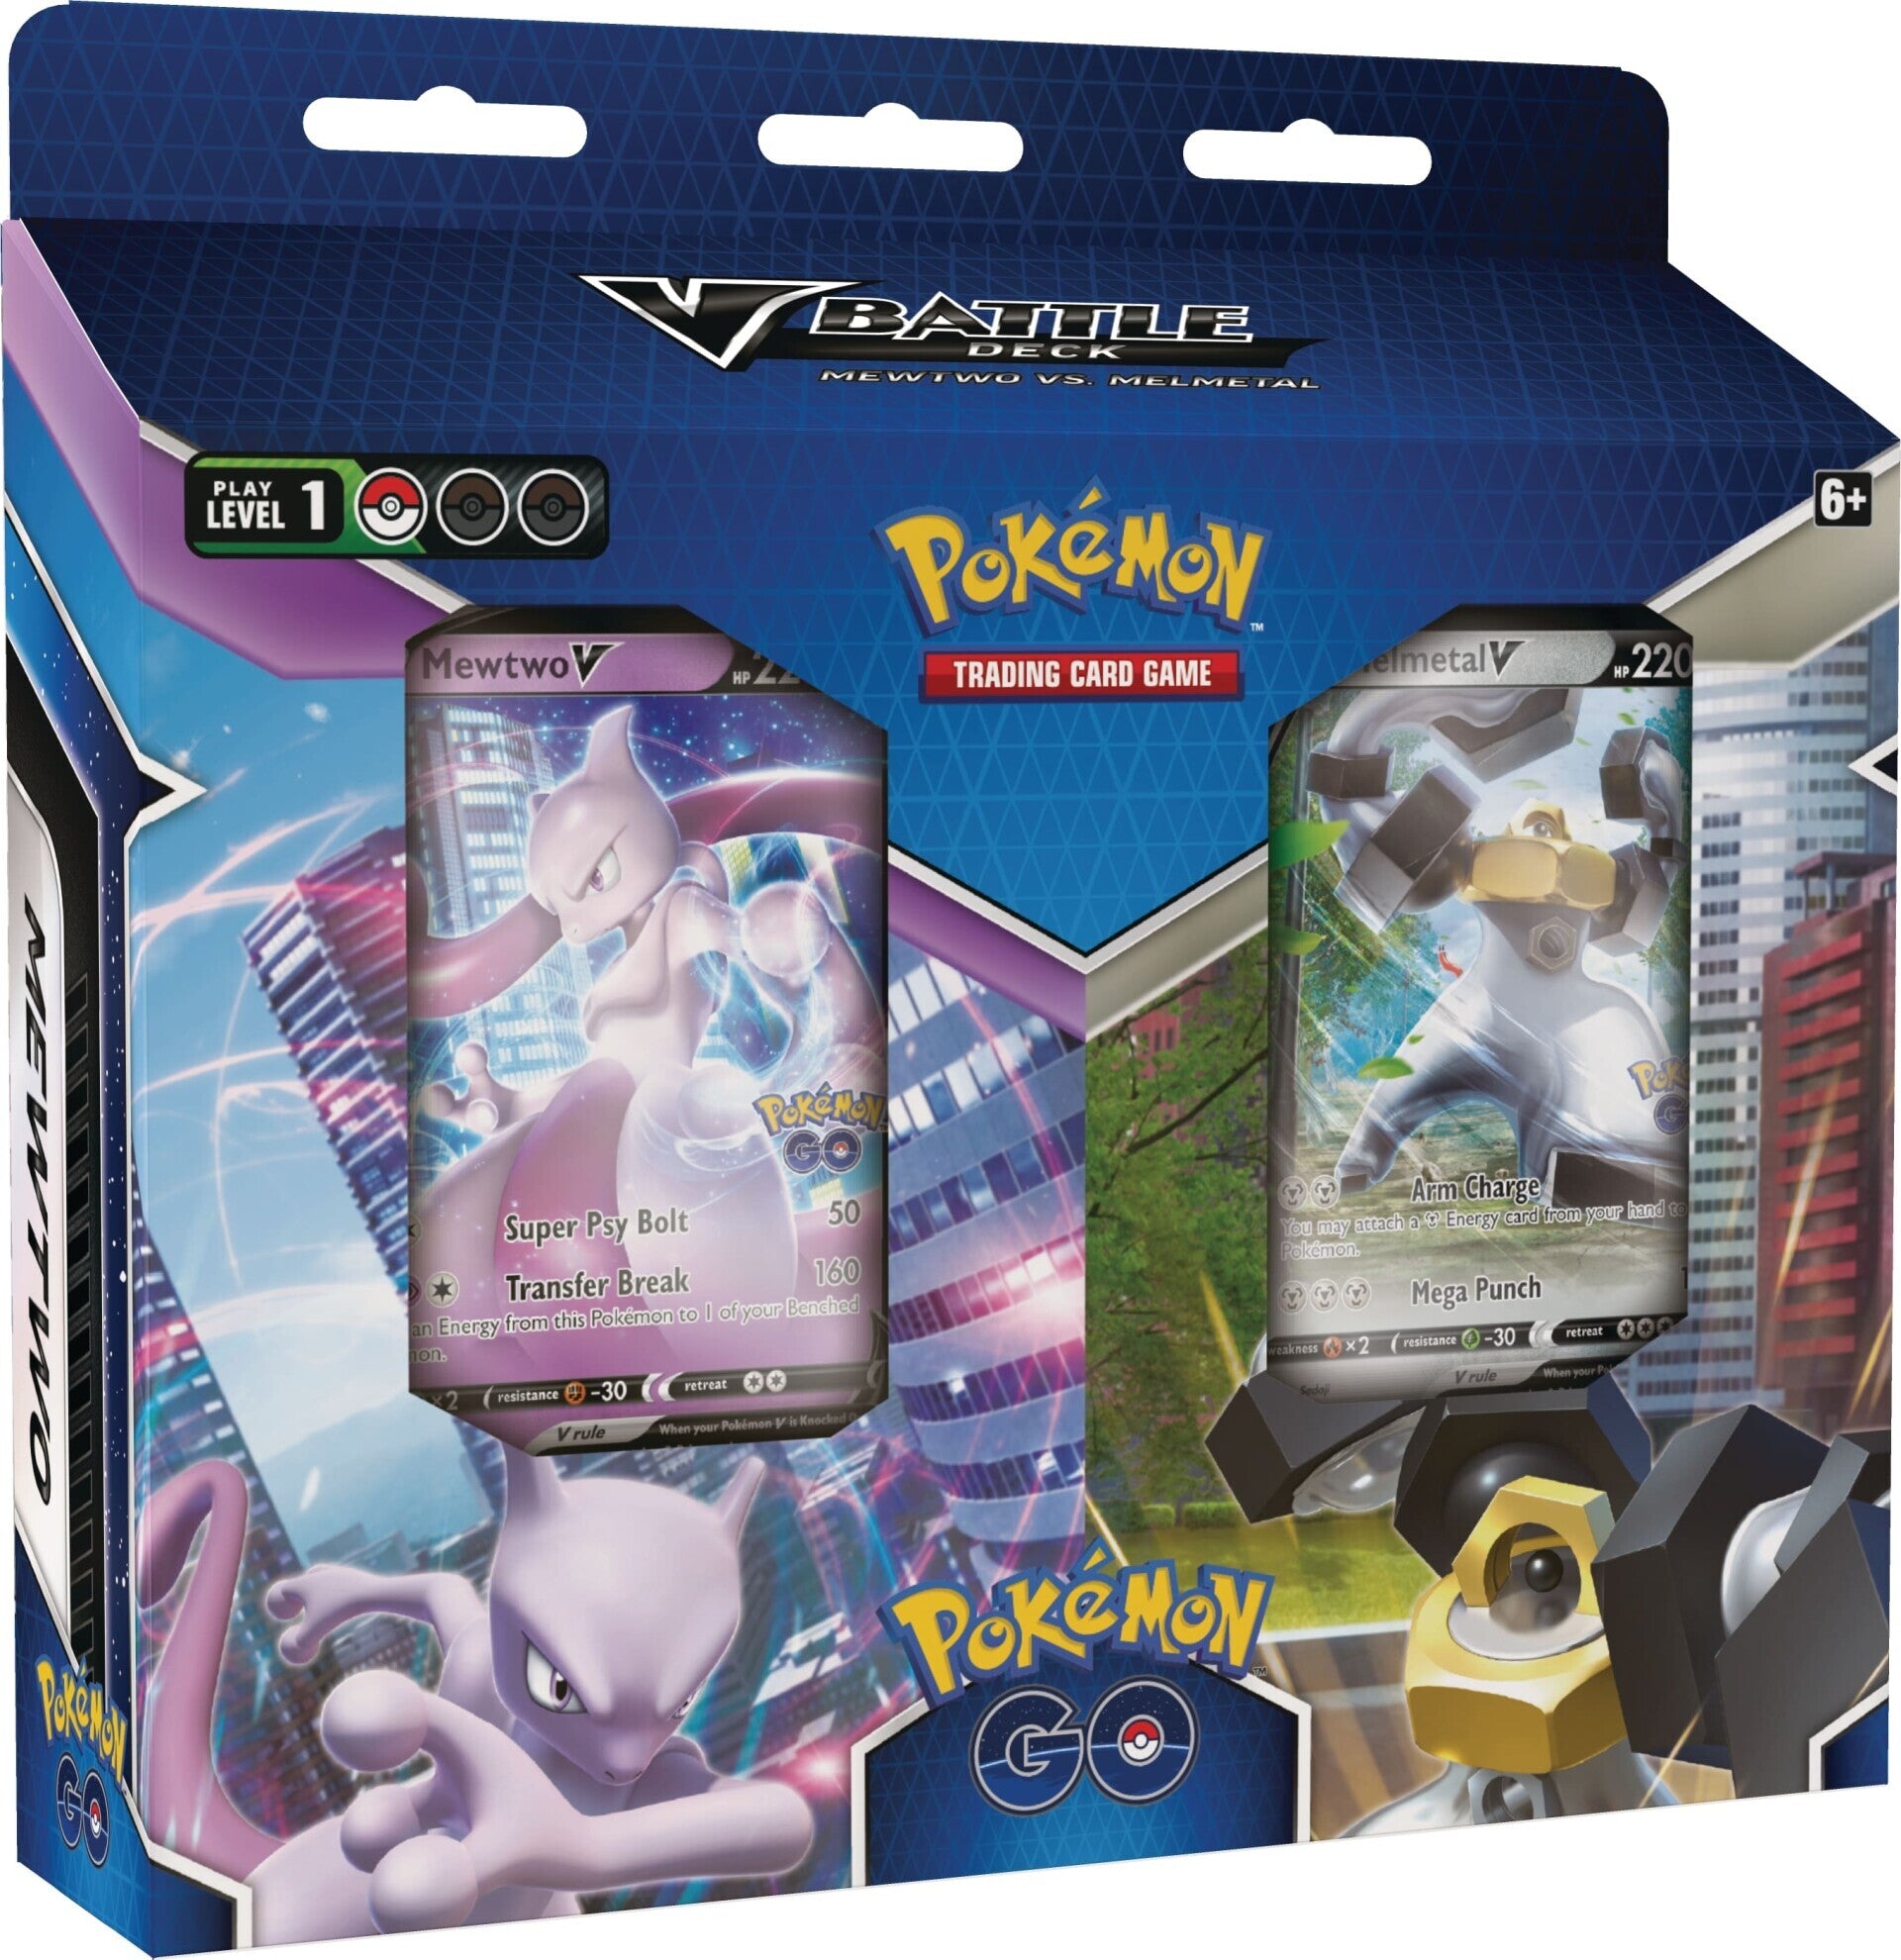 Pokémon TCG: Pokémon GO V Battle Deck Bundle - Mewtwo V vs. Melmetal V (Includes 2 Booster Packs) - Boxes & Cases